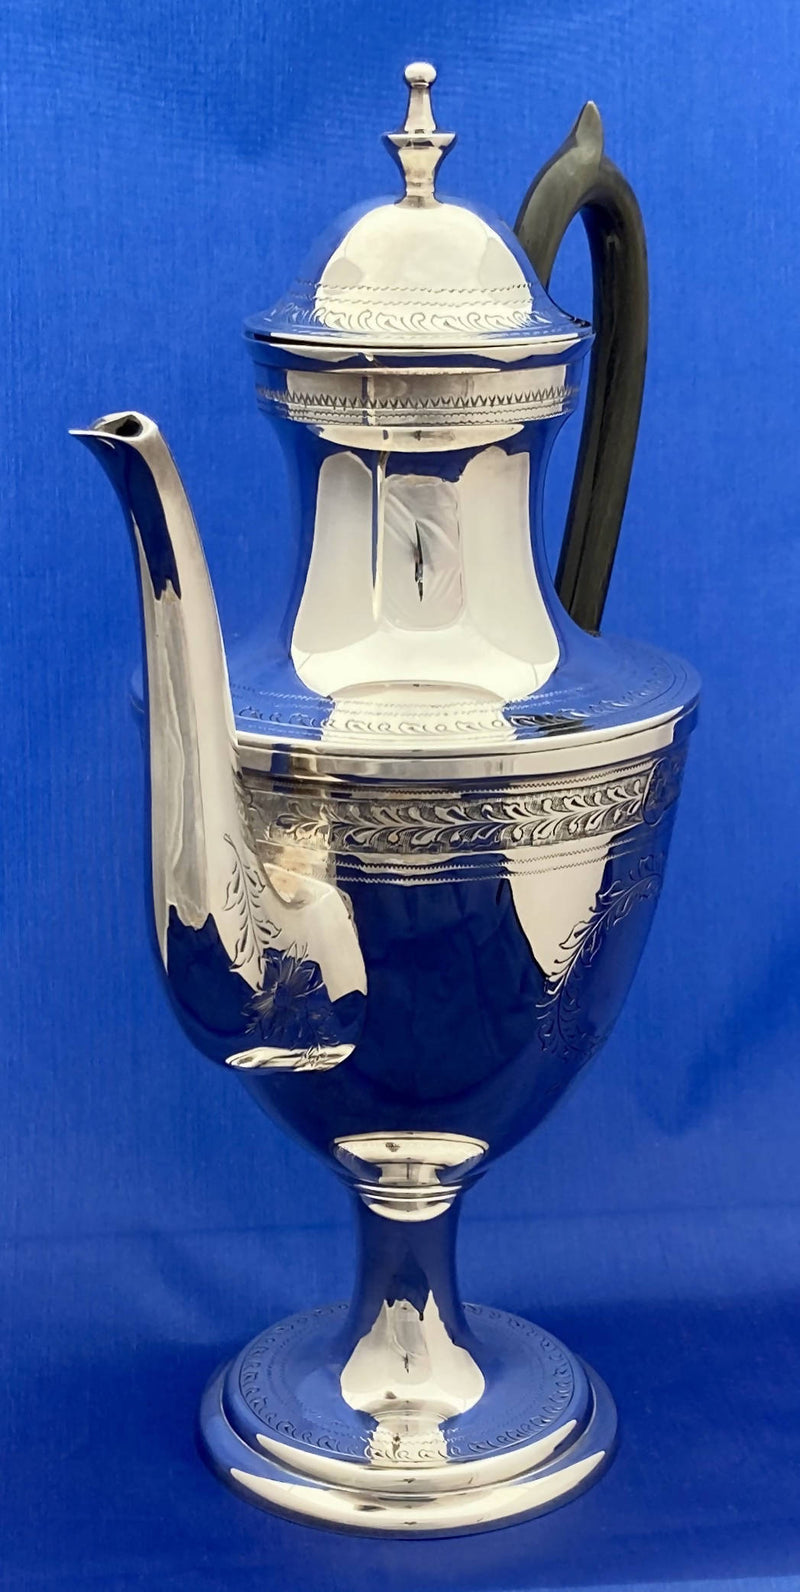 George III Style Silver Plated Pedestal Coffee Pot, circa 1890 - 1910.